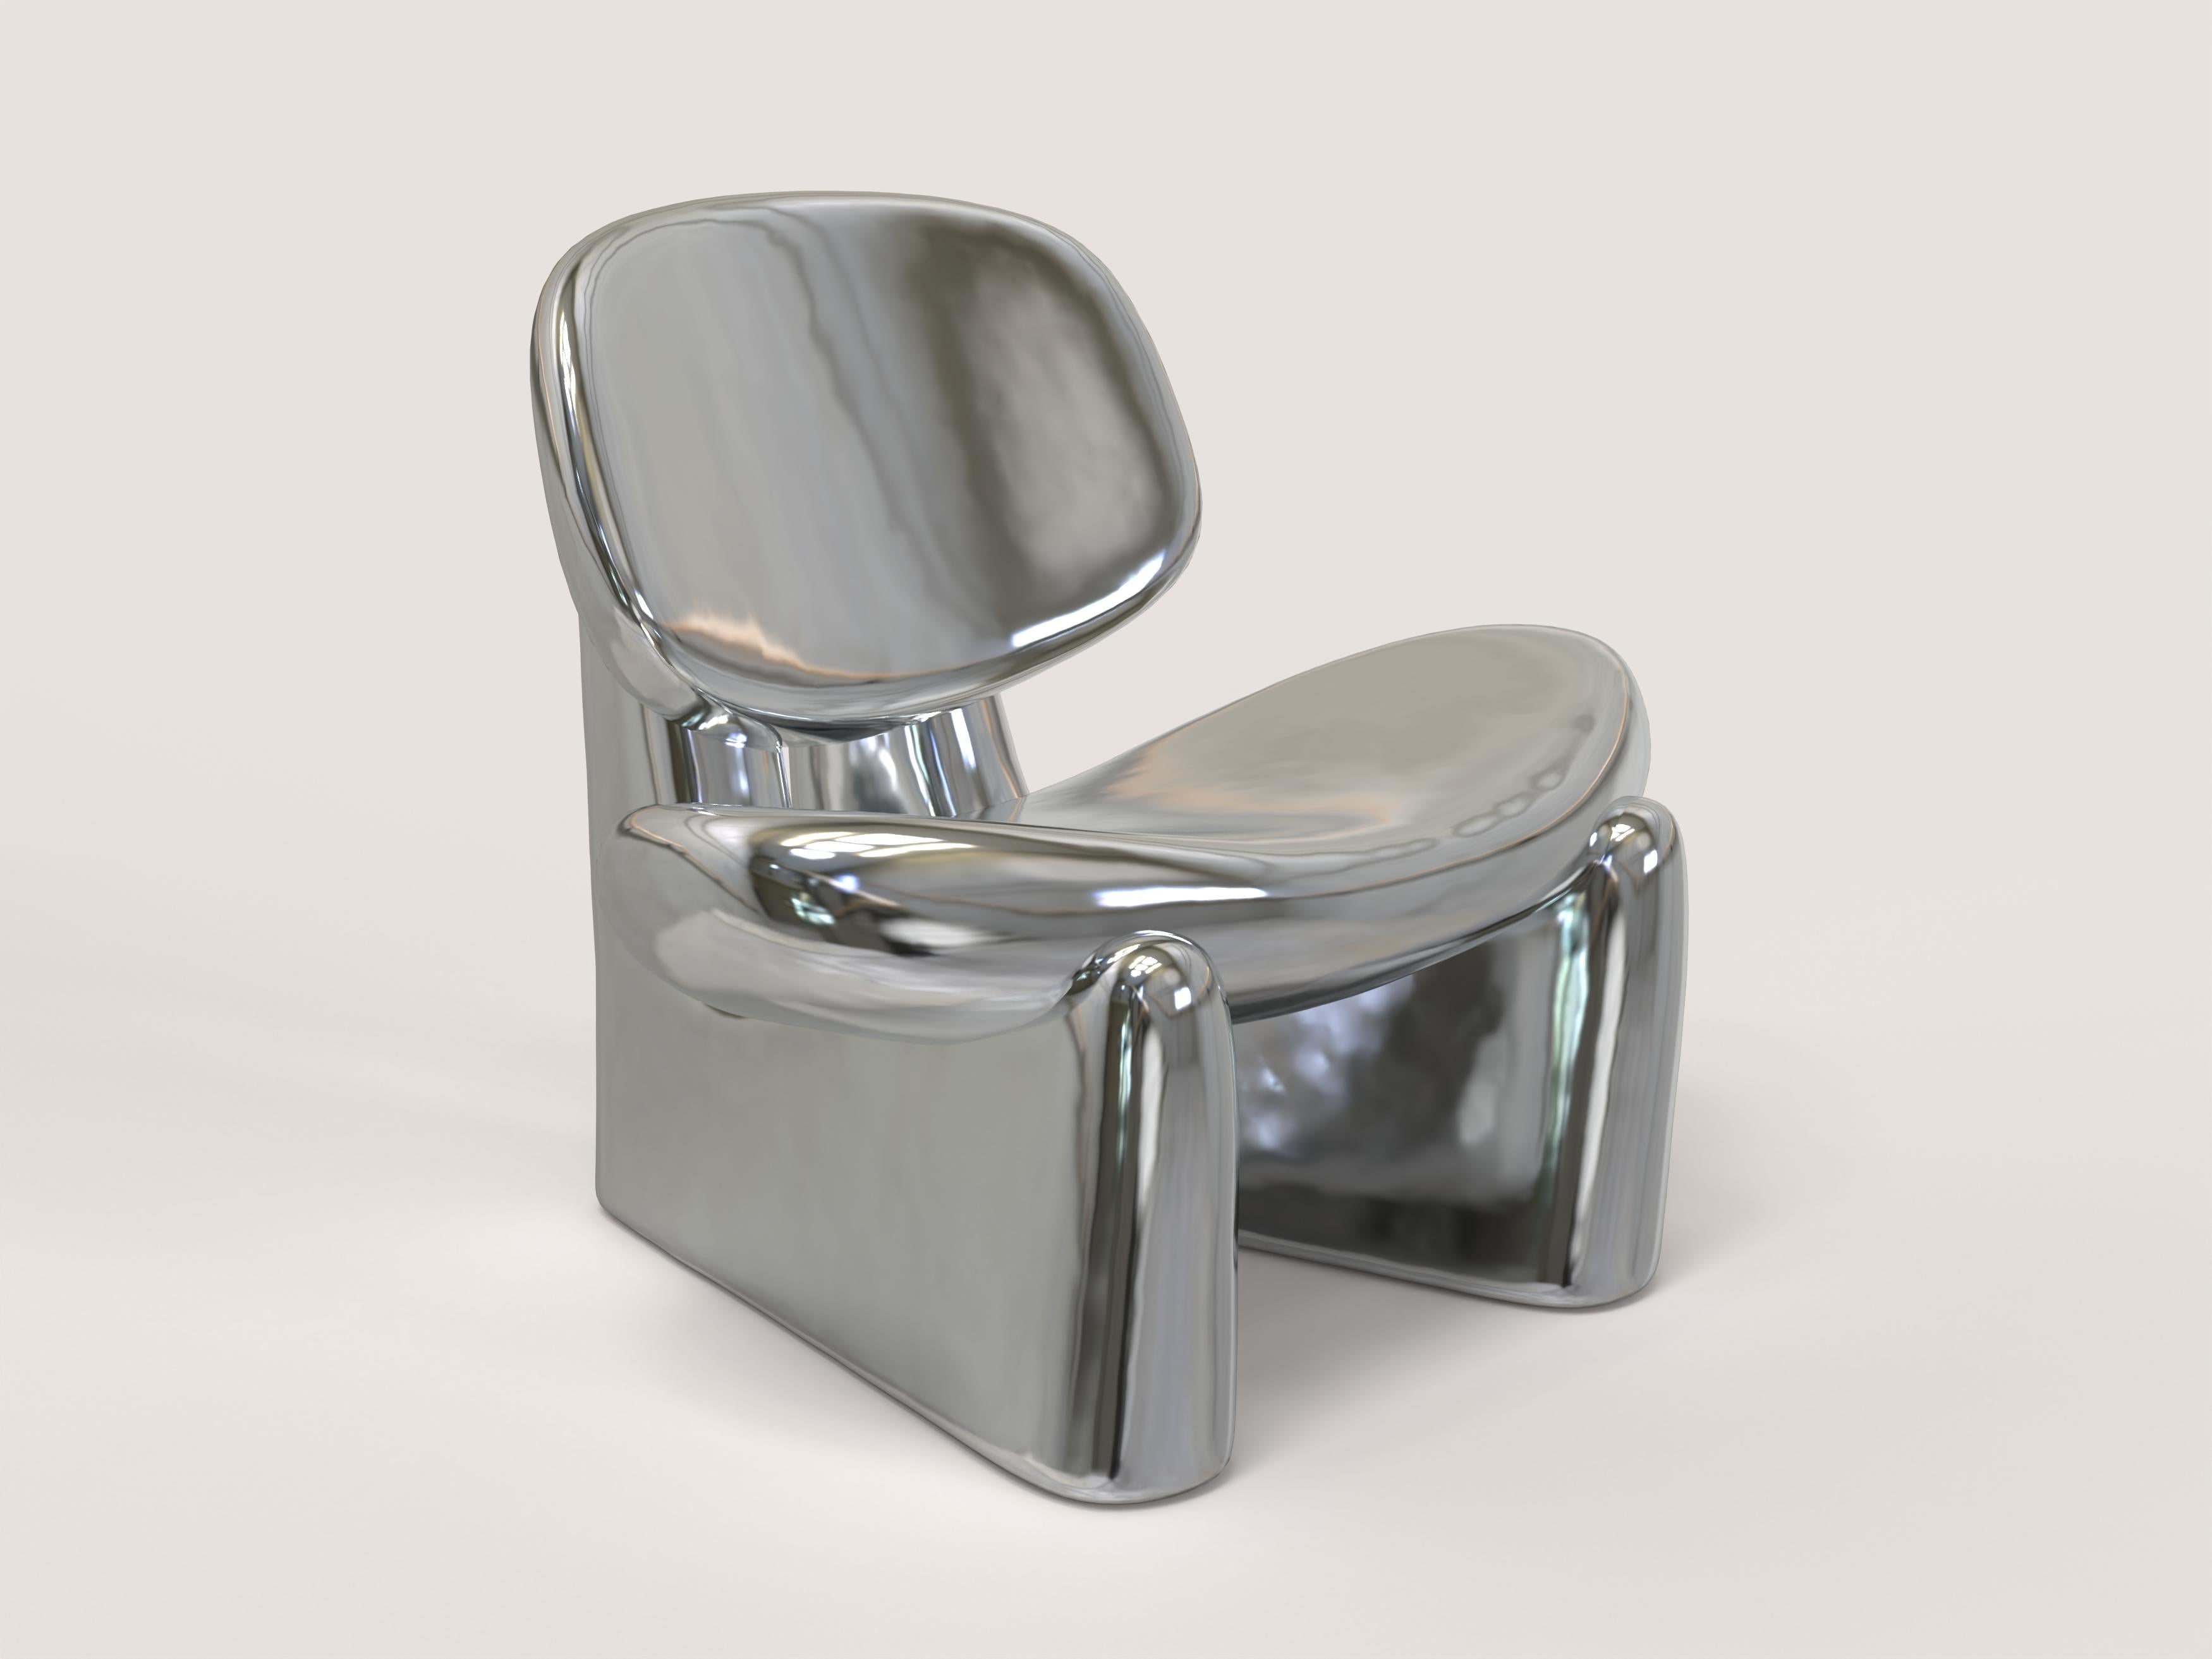 Italian Contemporary Limited Edition Signed Armchair, Pau Silver V1 by Edizione Limitata For Sale